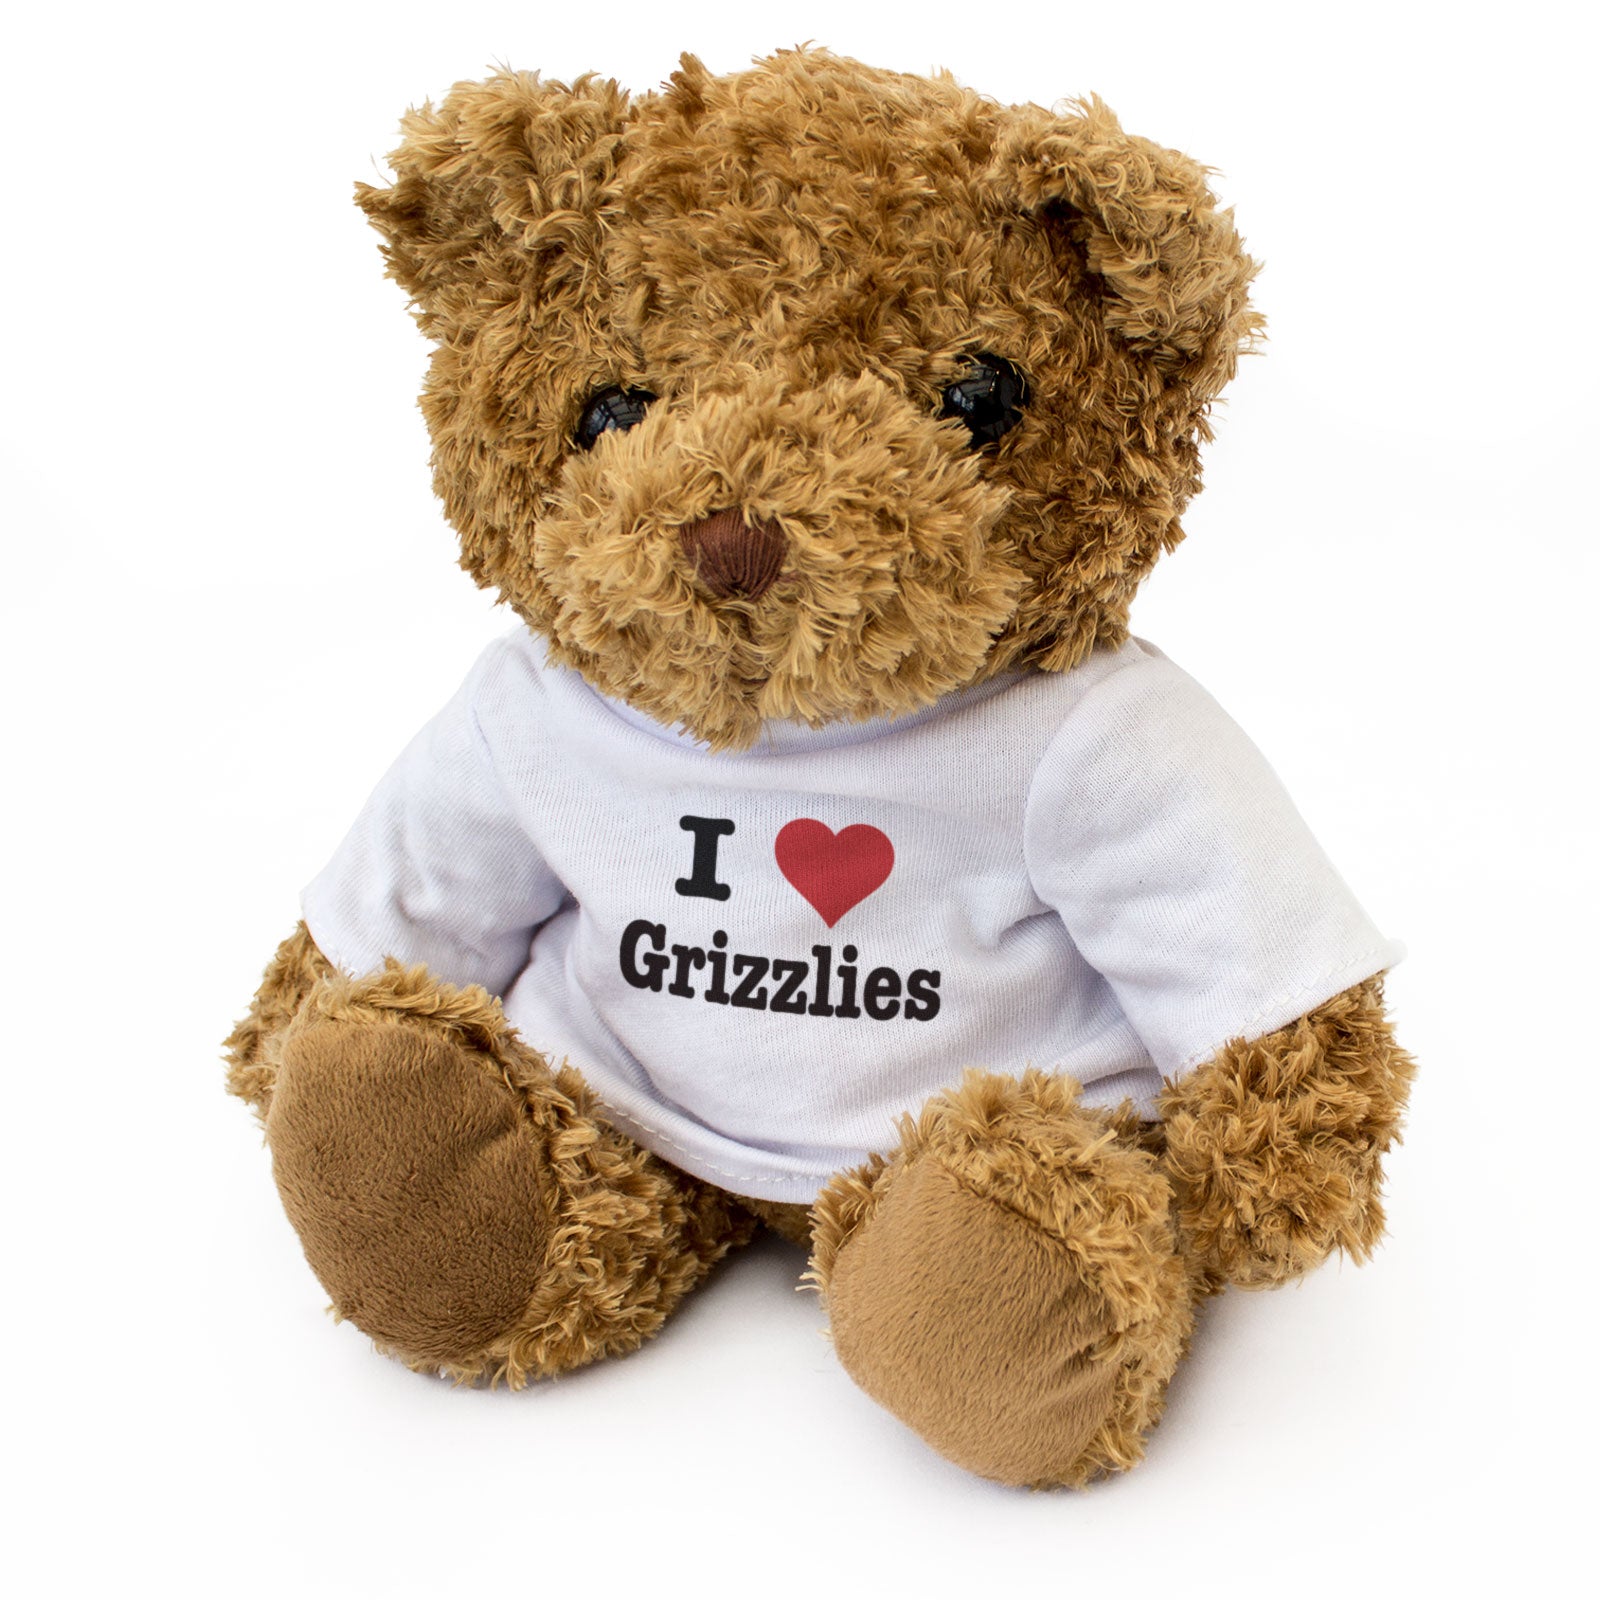 I Love Grizzlies - Teddy Bear